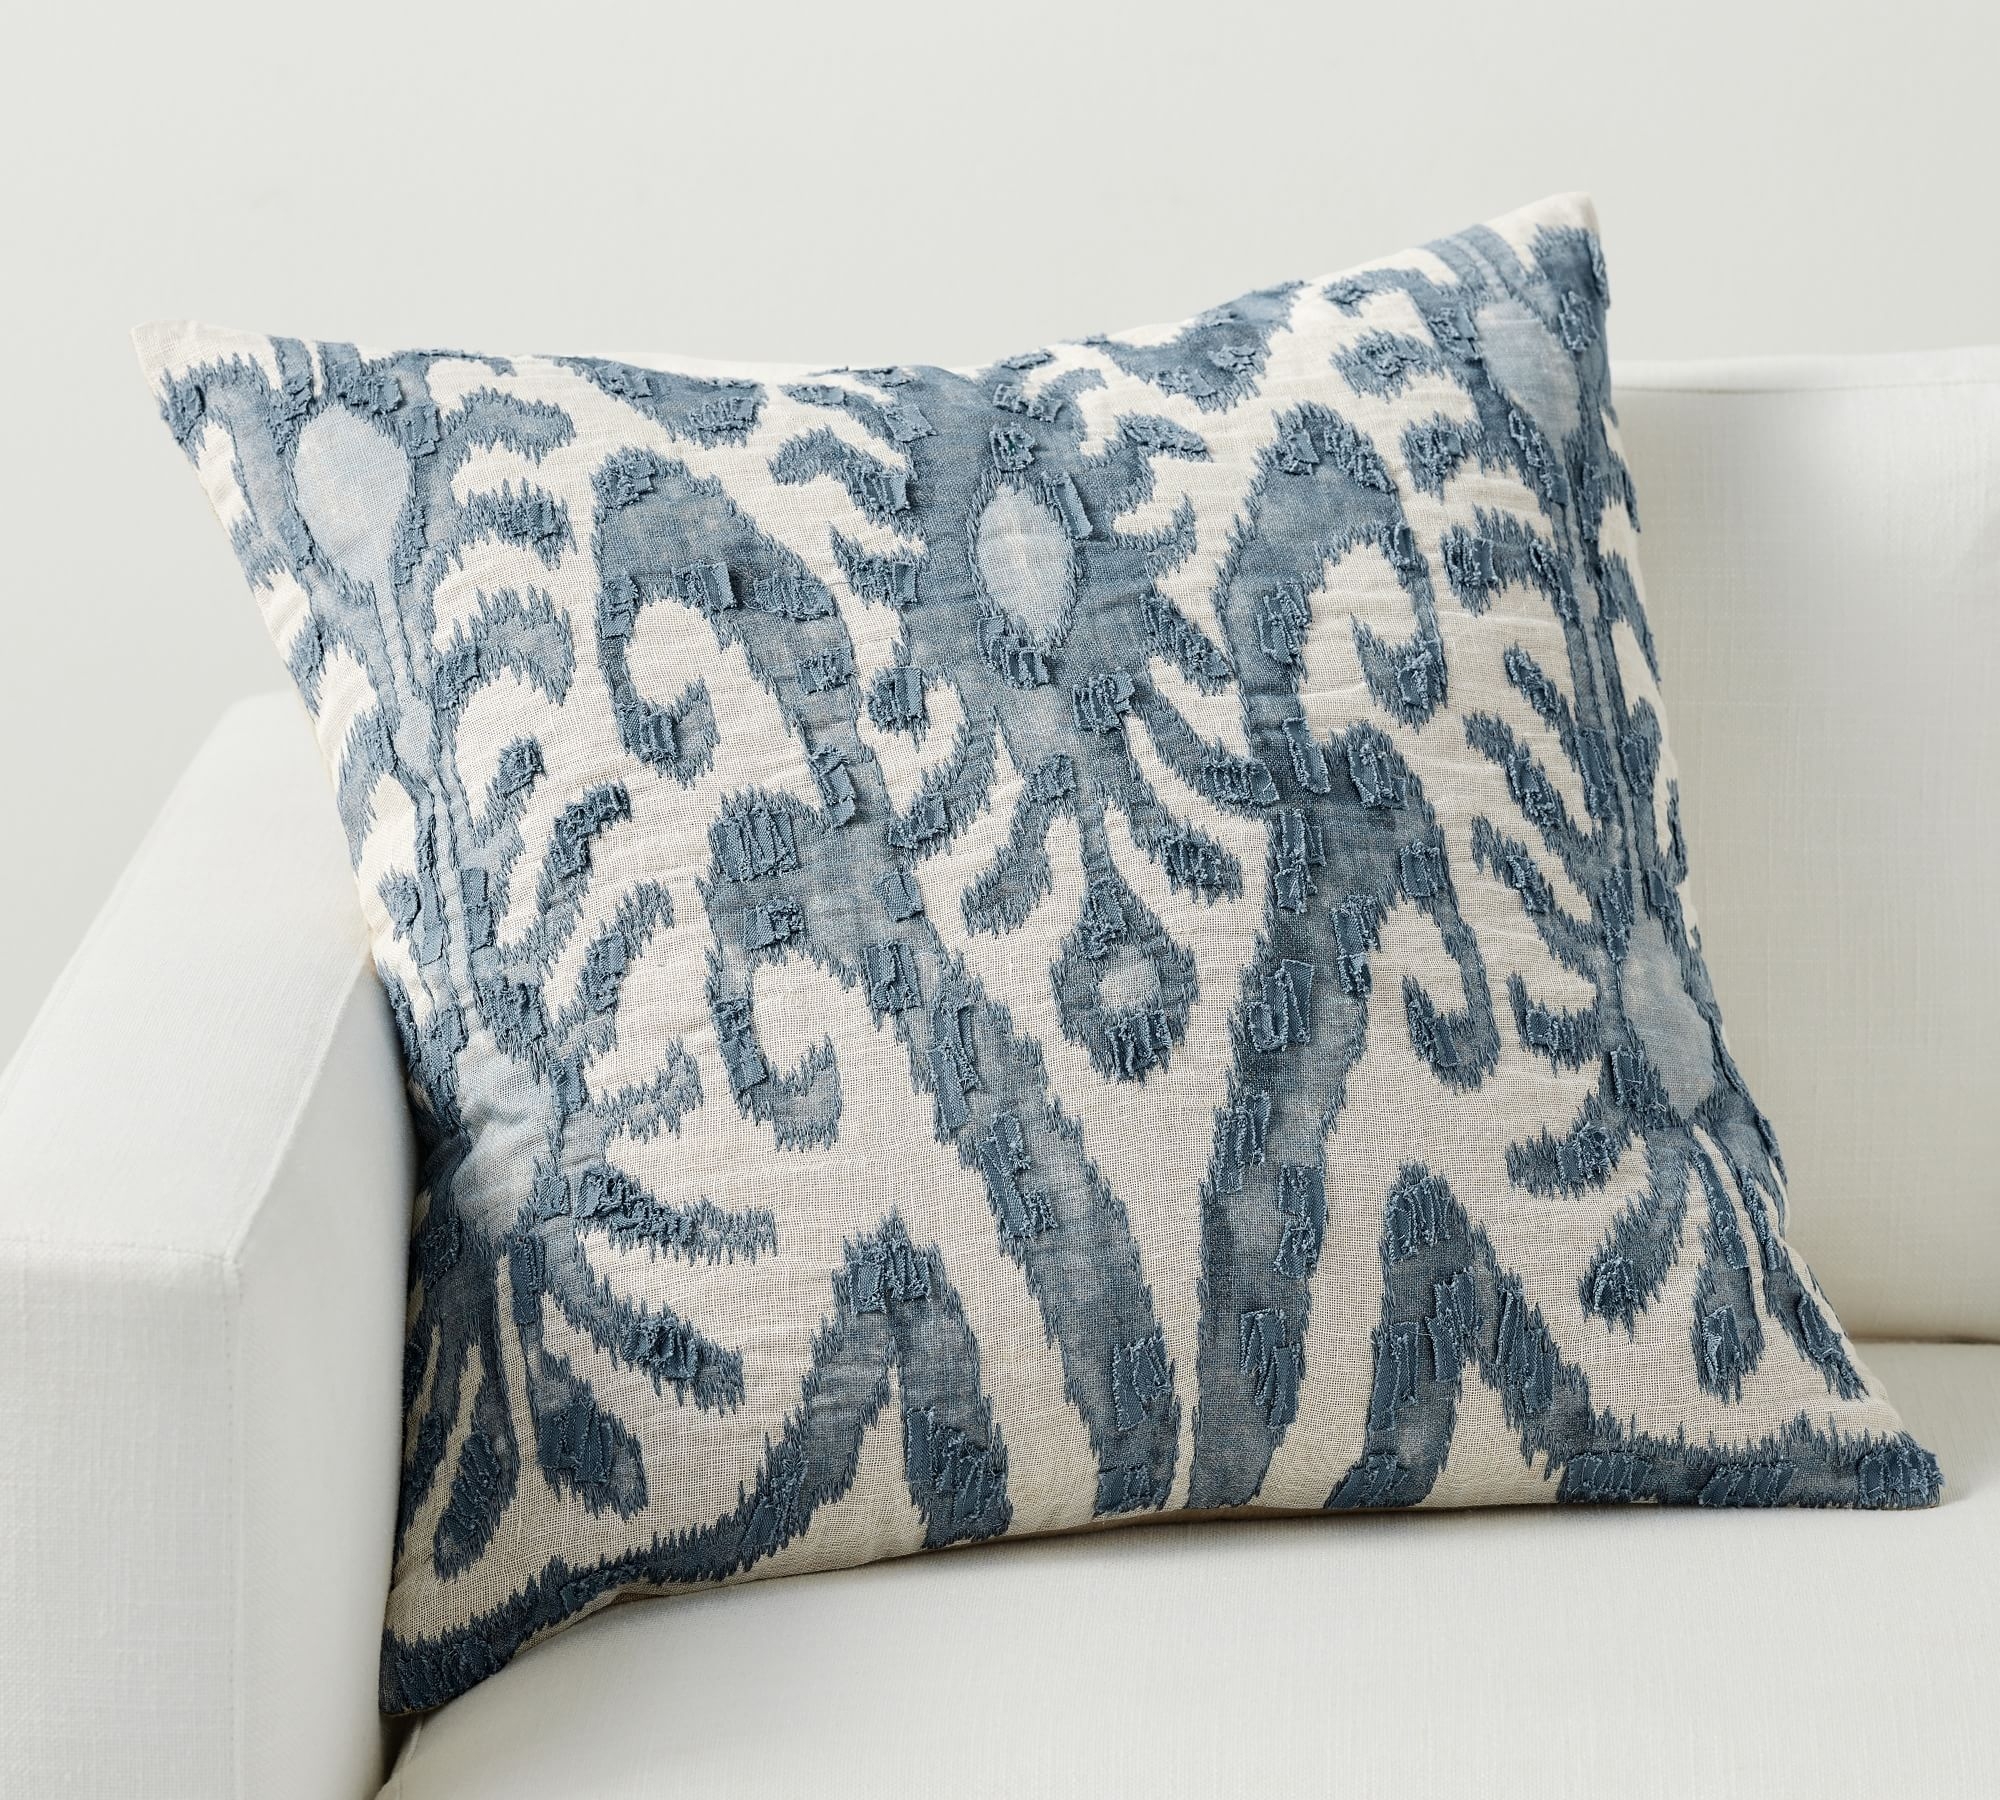 Flint Embroidered Lumbar Pillow Cover, 16 x 26", Blue - Image 0